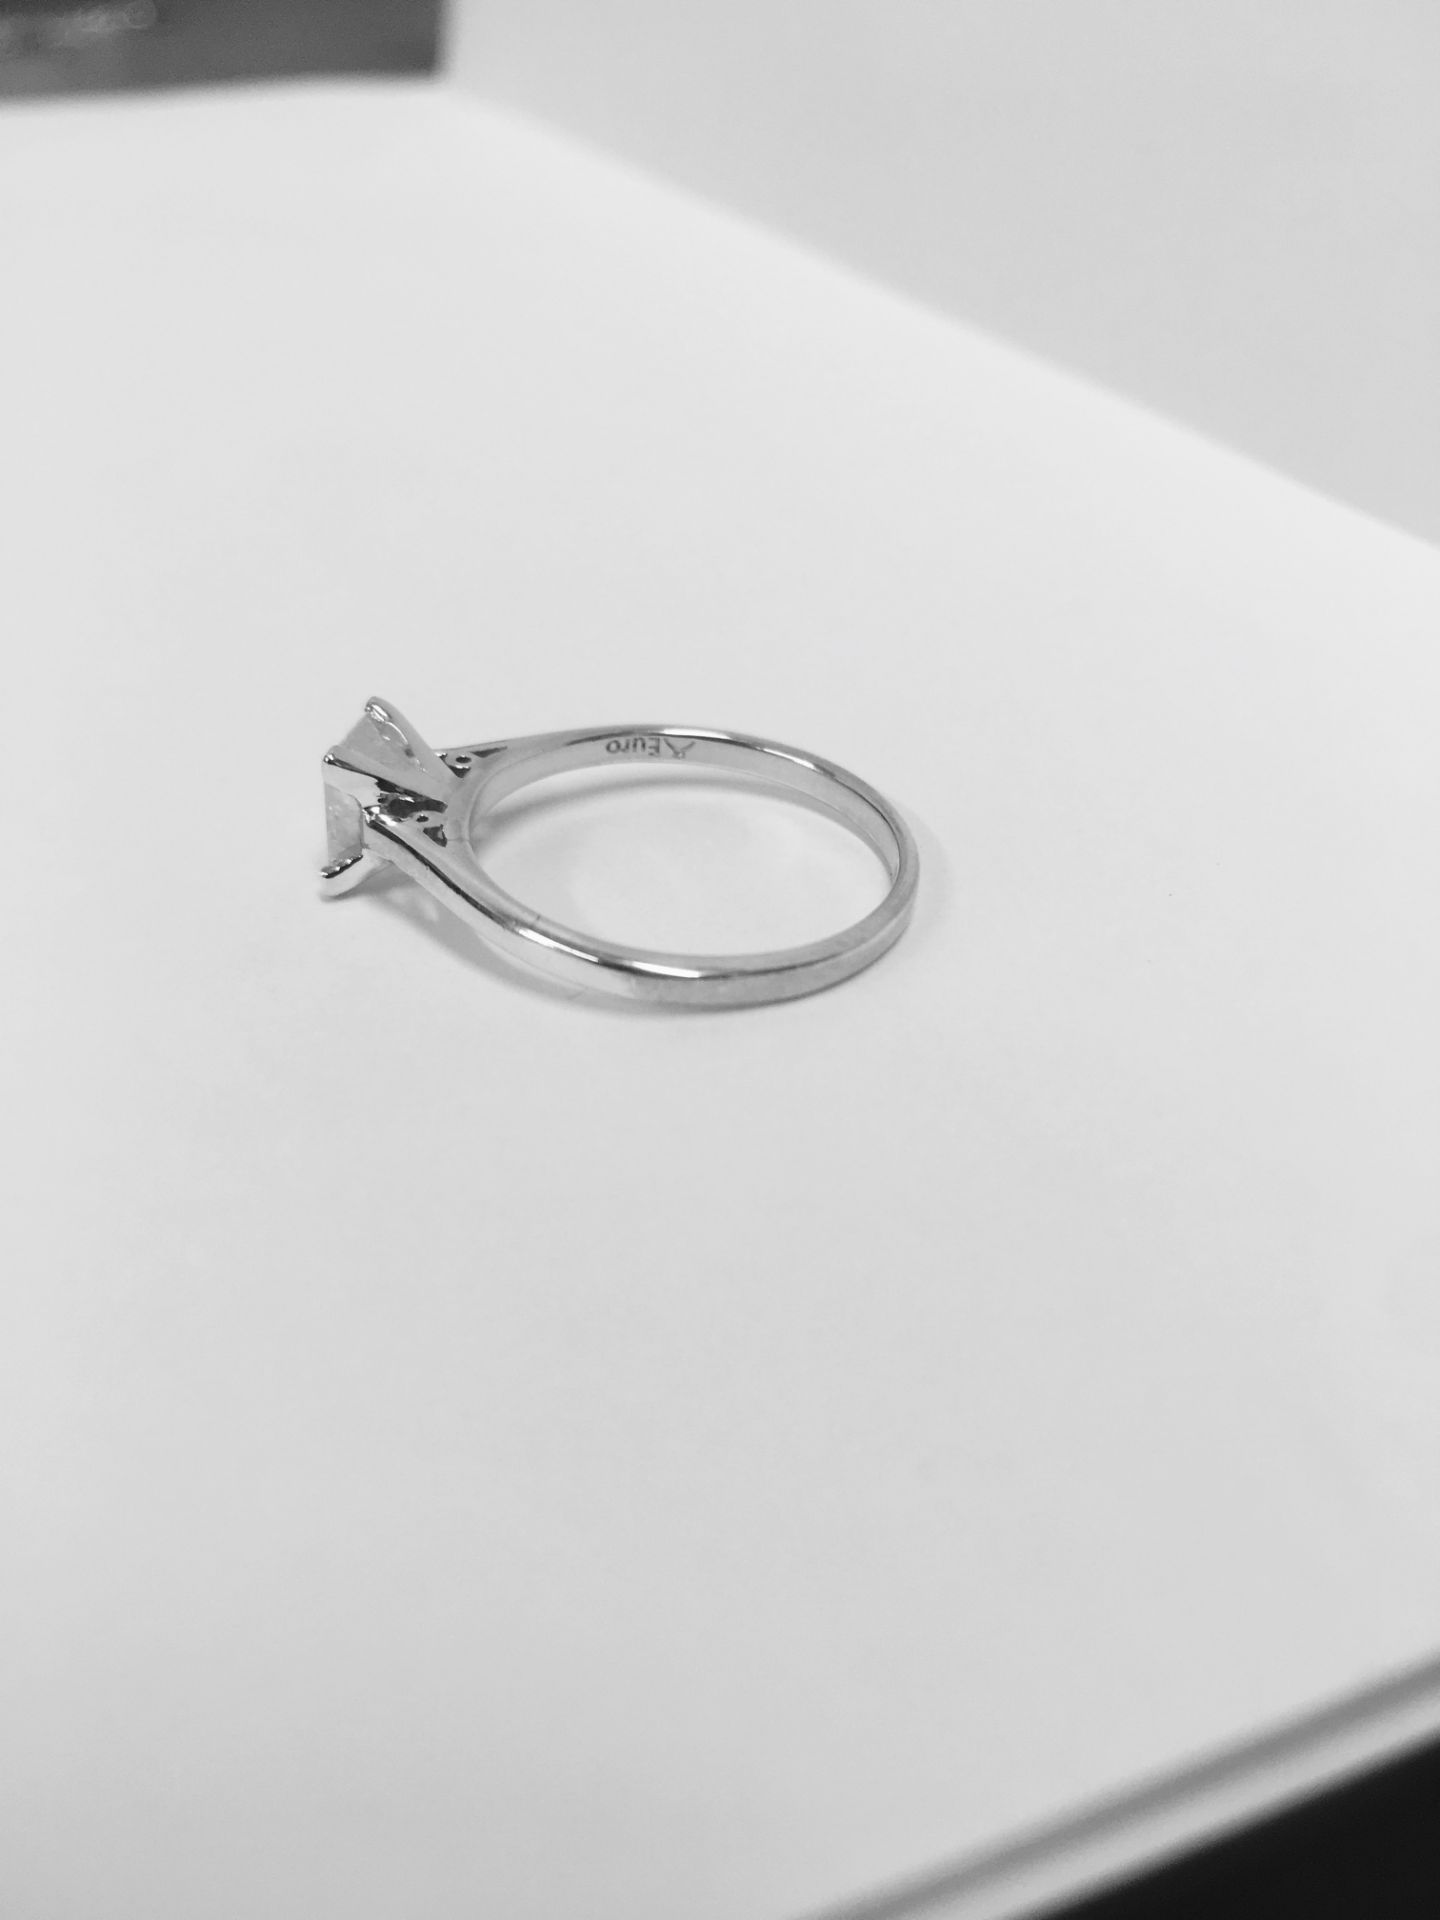 1ct Princess cut diamond solitaire ring,1ct princess cut h colour i2 clarity (enhanced),2.9gms - Image 2 of 6